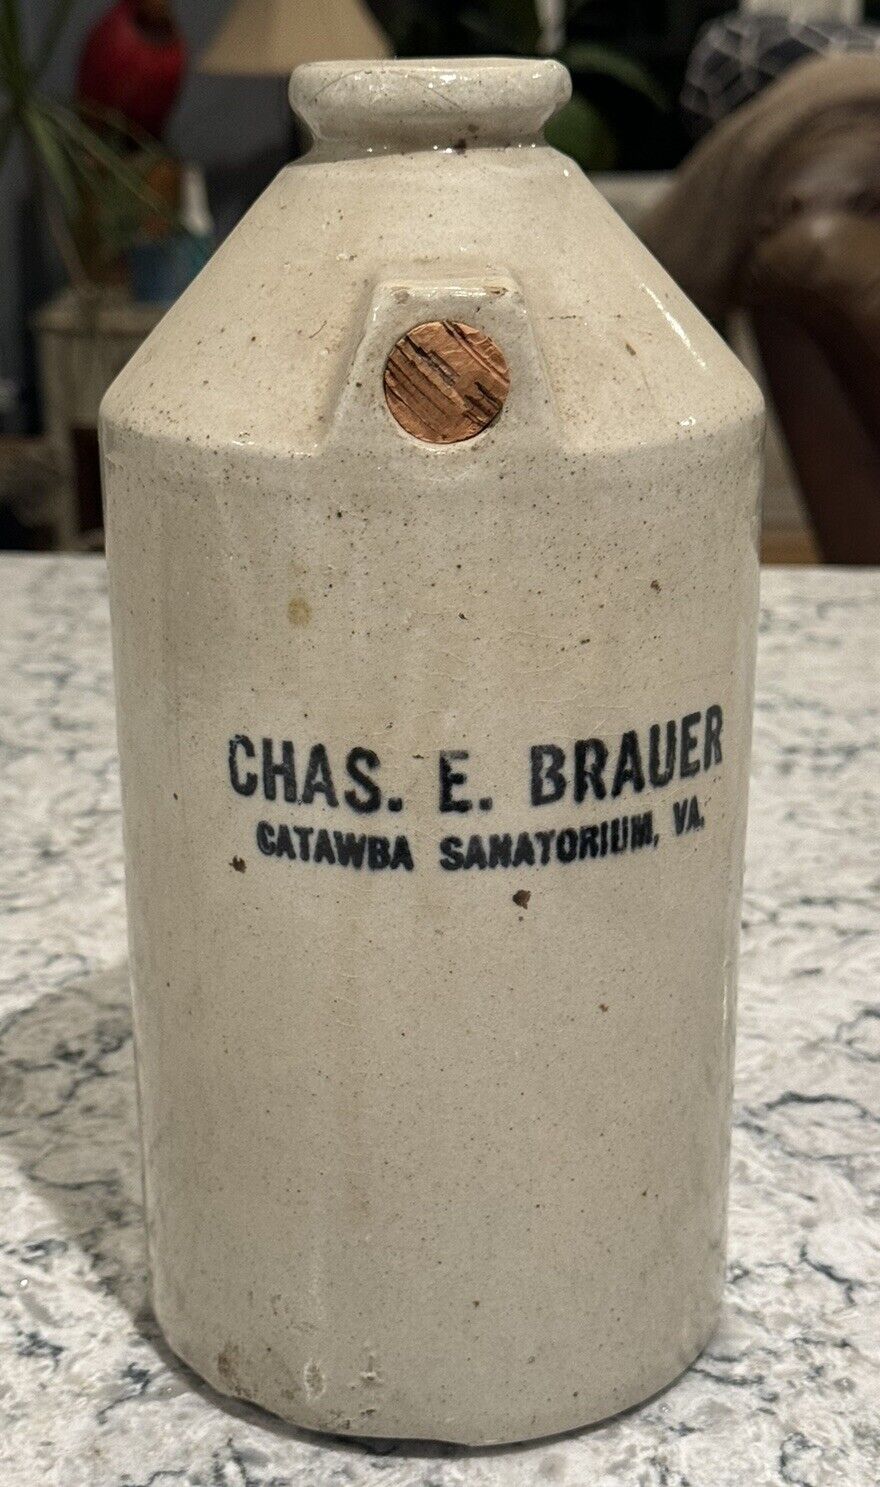 Antique Stoneware Foot/Bed Warmer - Catawba Sanatorium, VA - Chas. E. Brauer